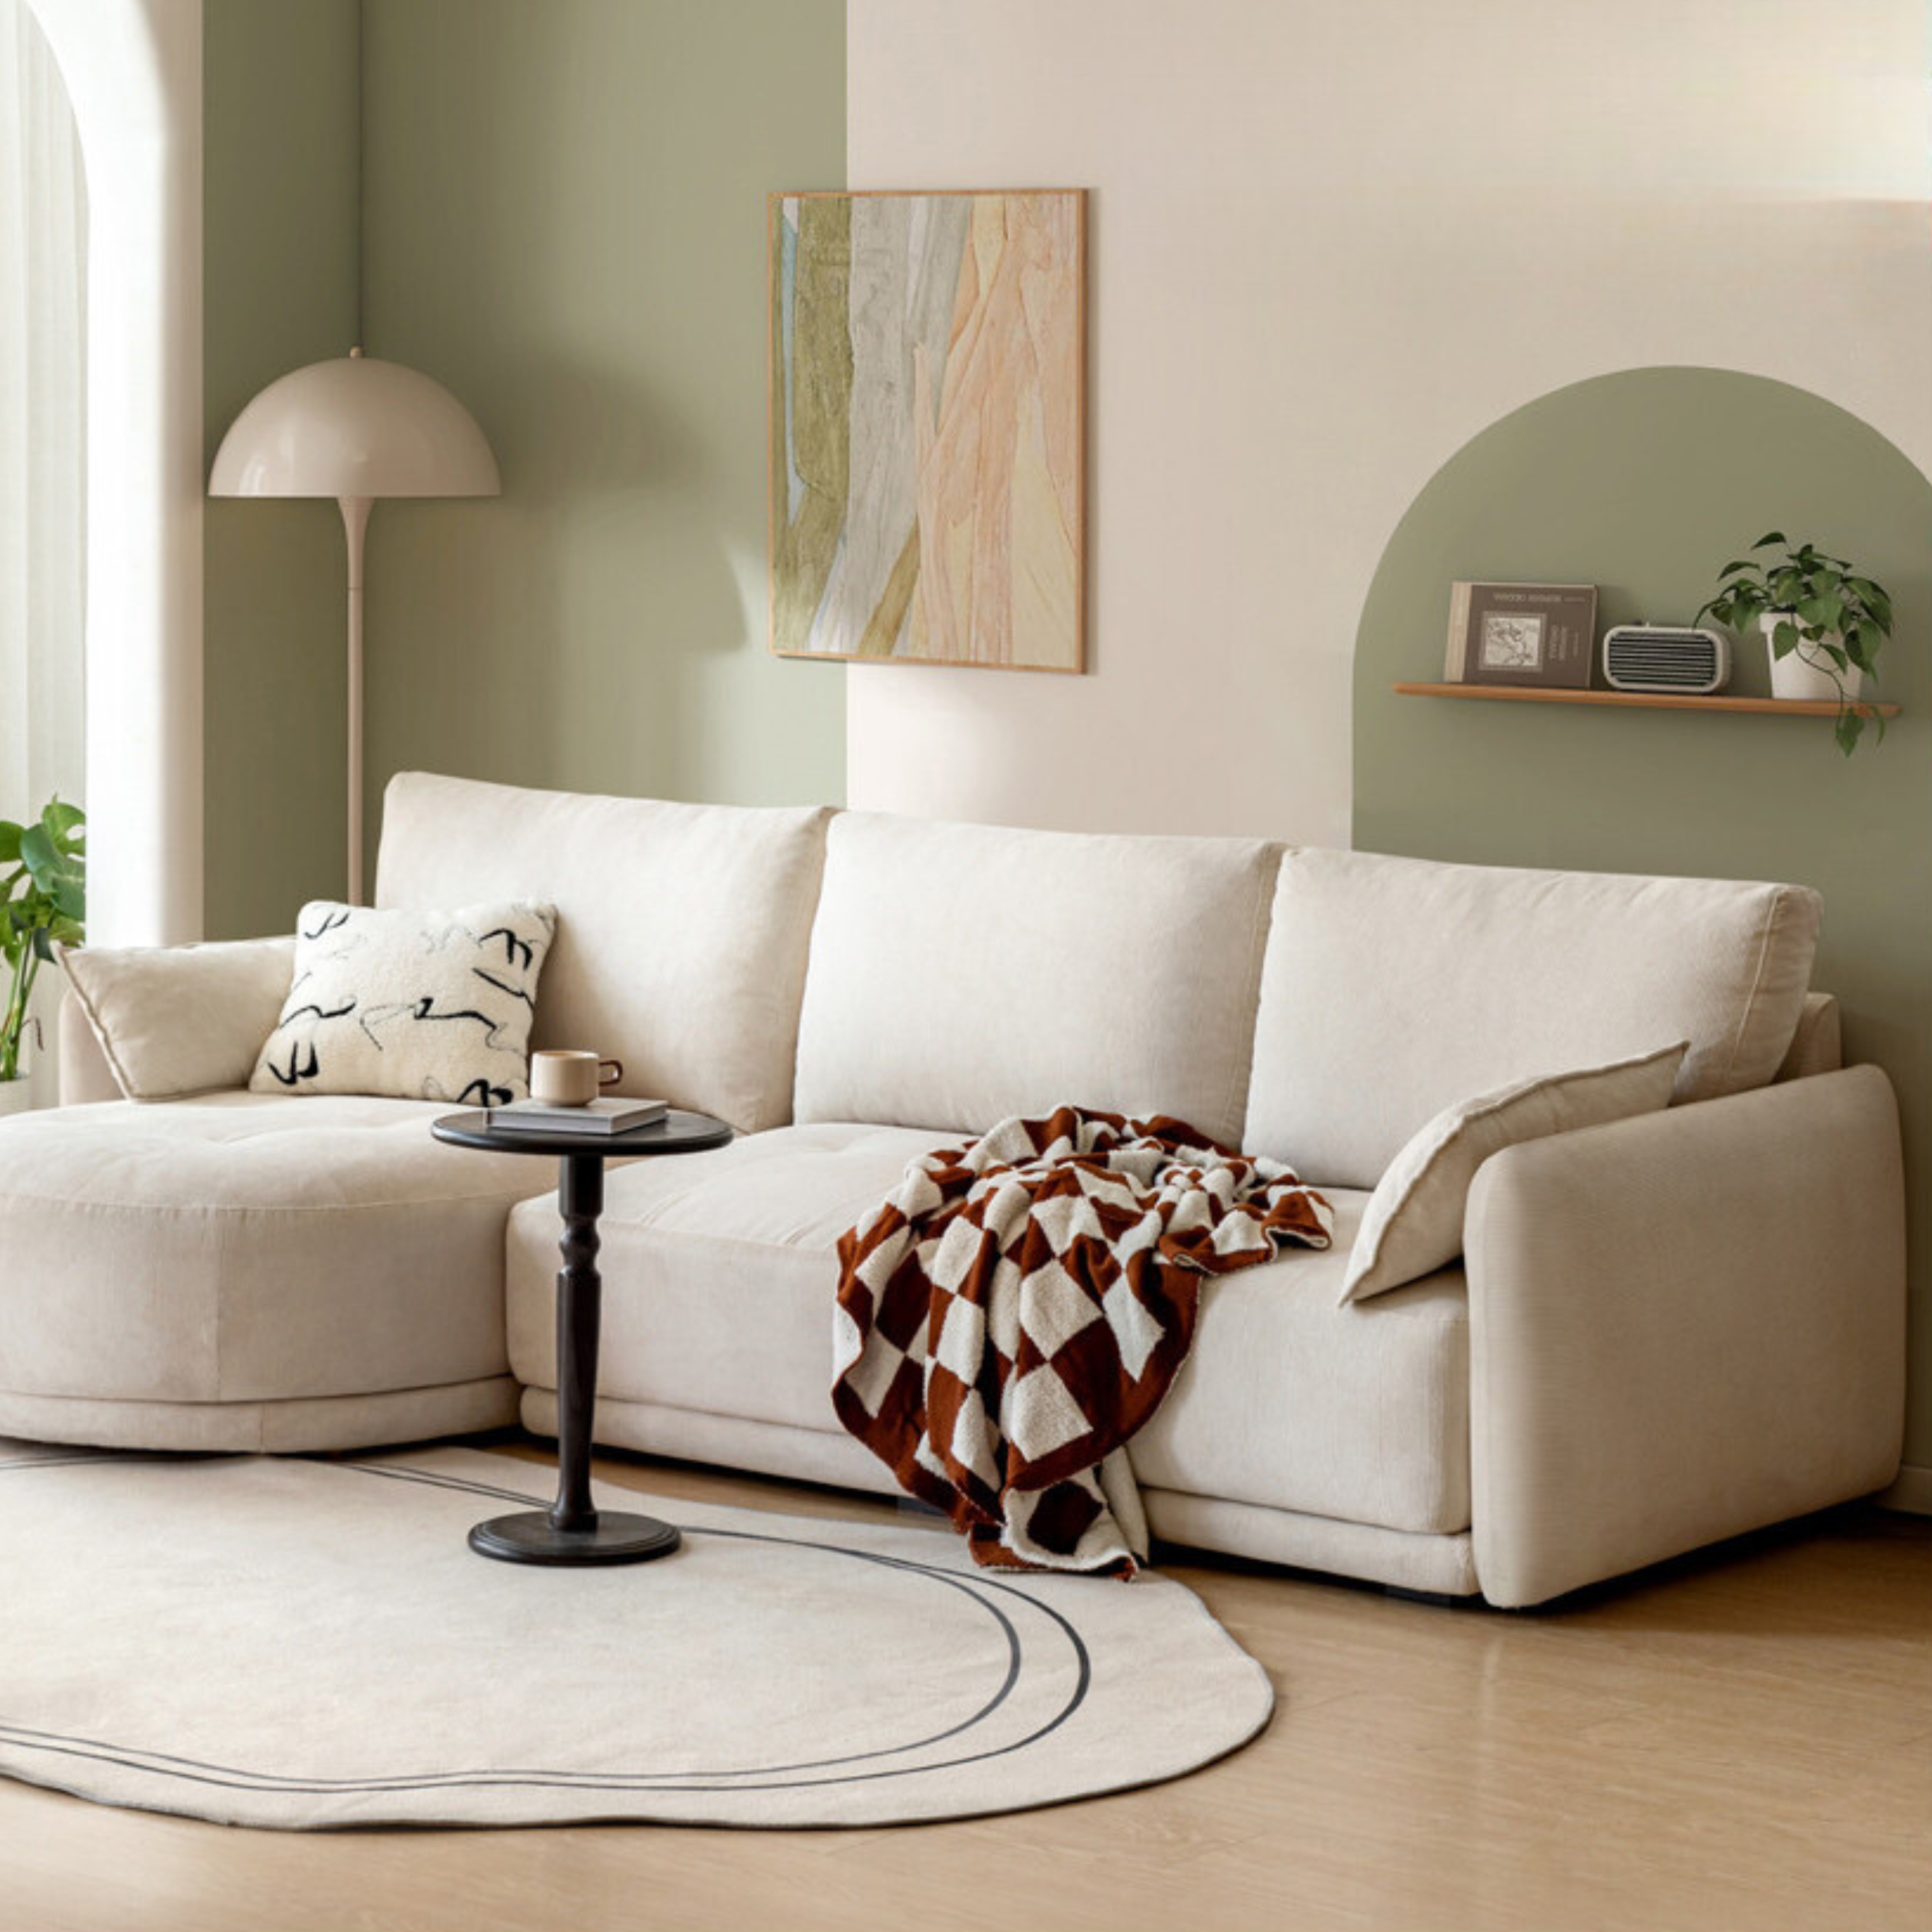 Fabric cream style white goose down corner sofa"